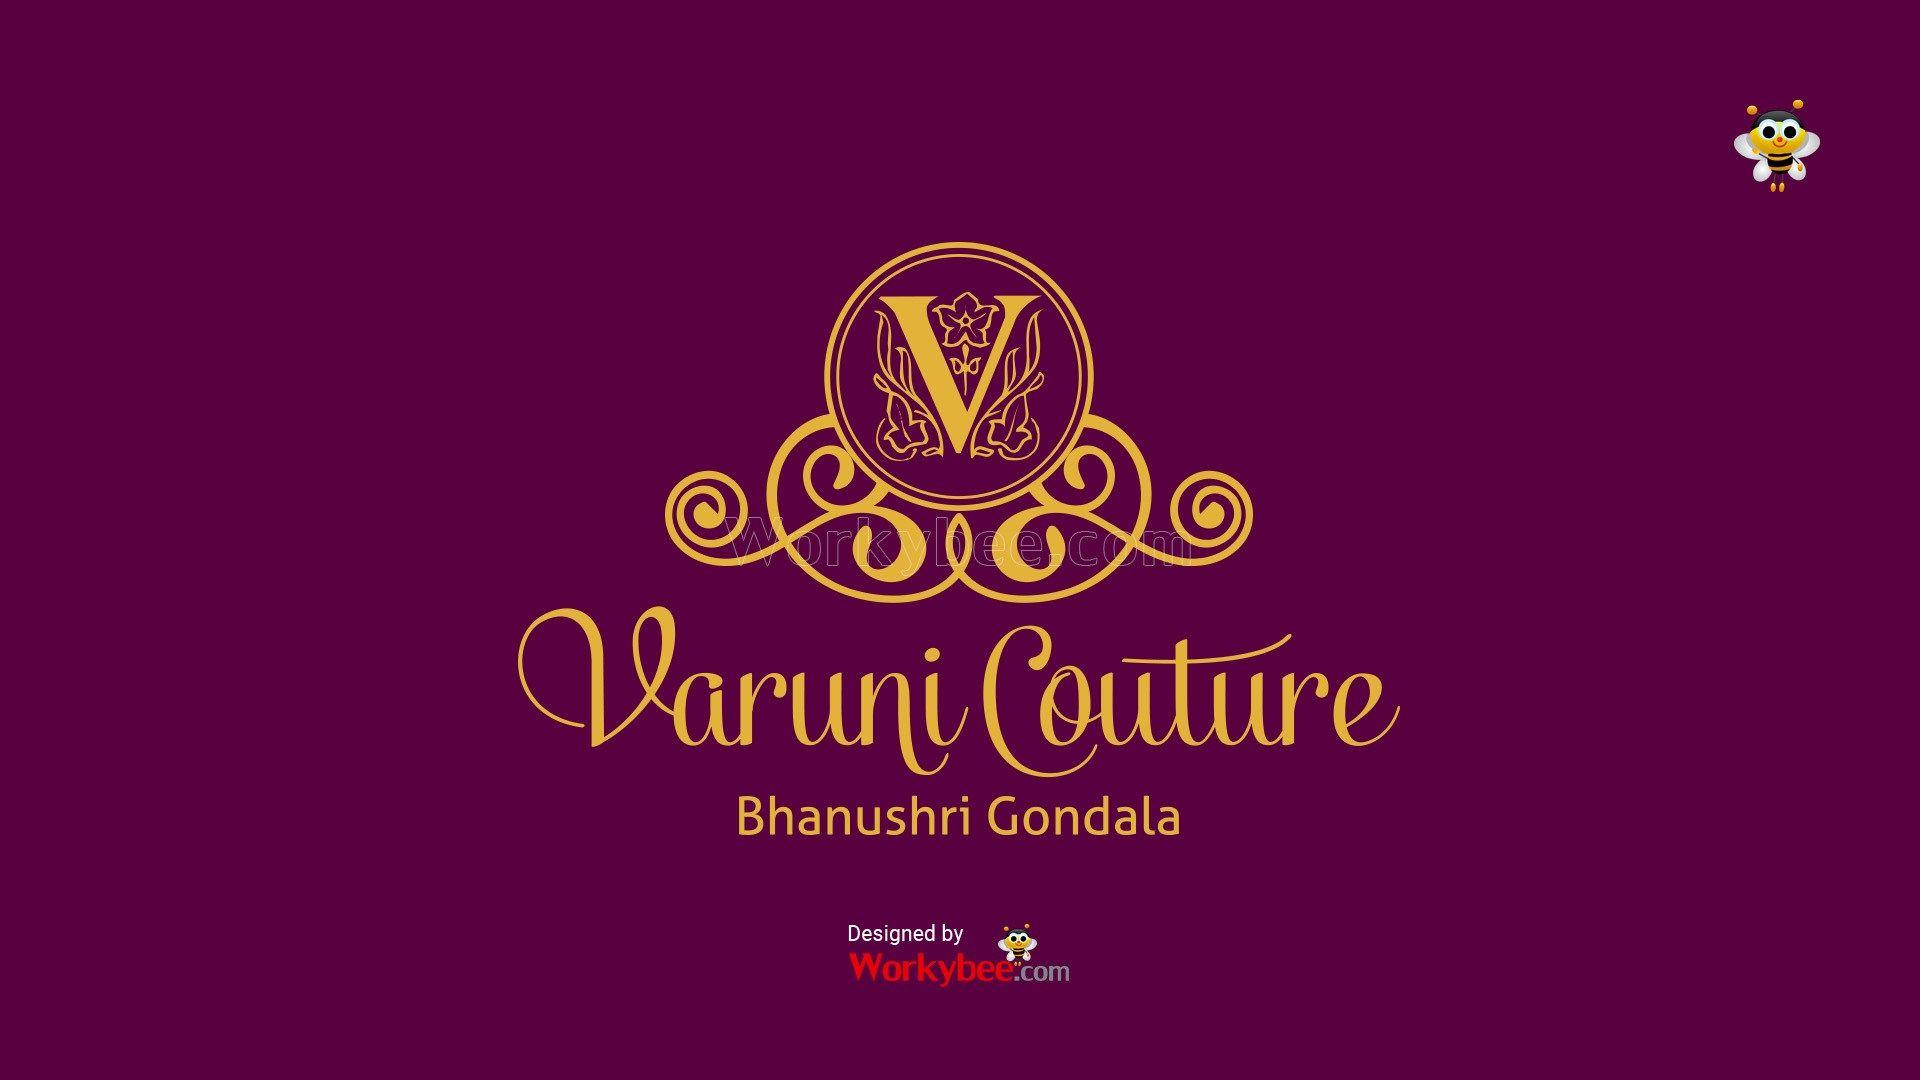 Couture Logo - Varuni Couture Logo - Workybee Design Studio